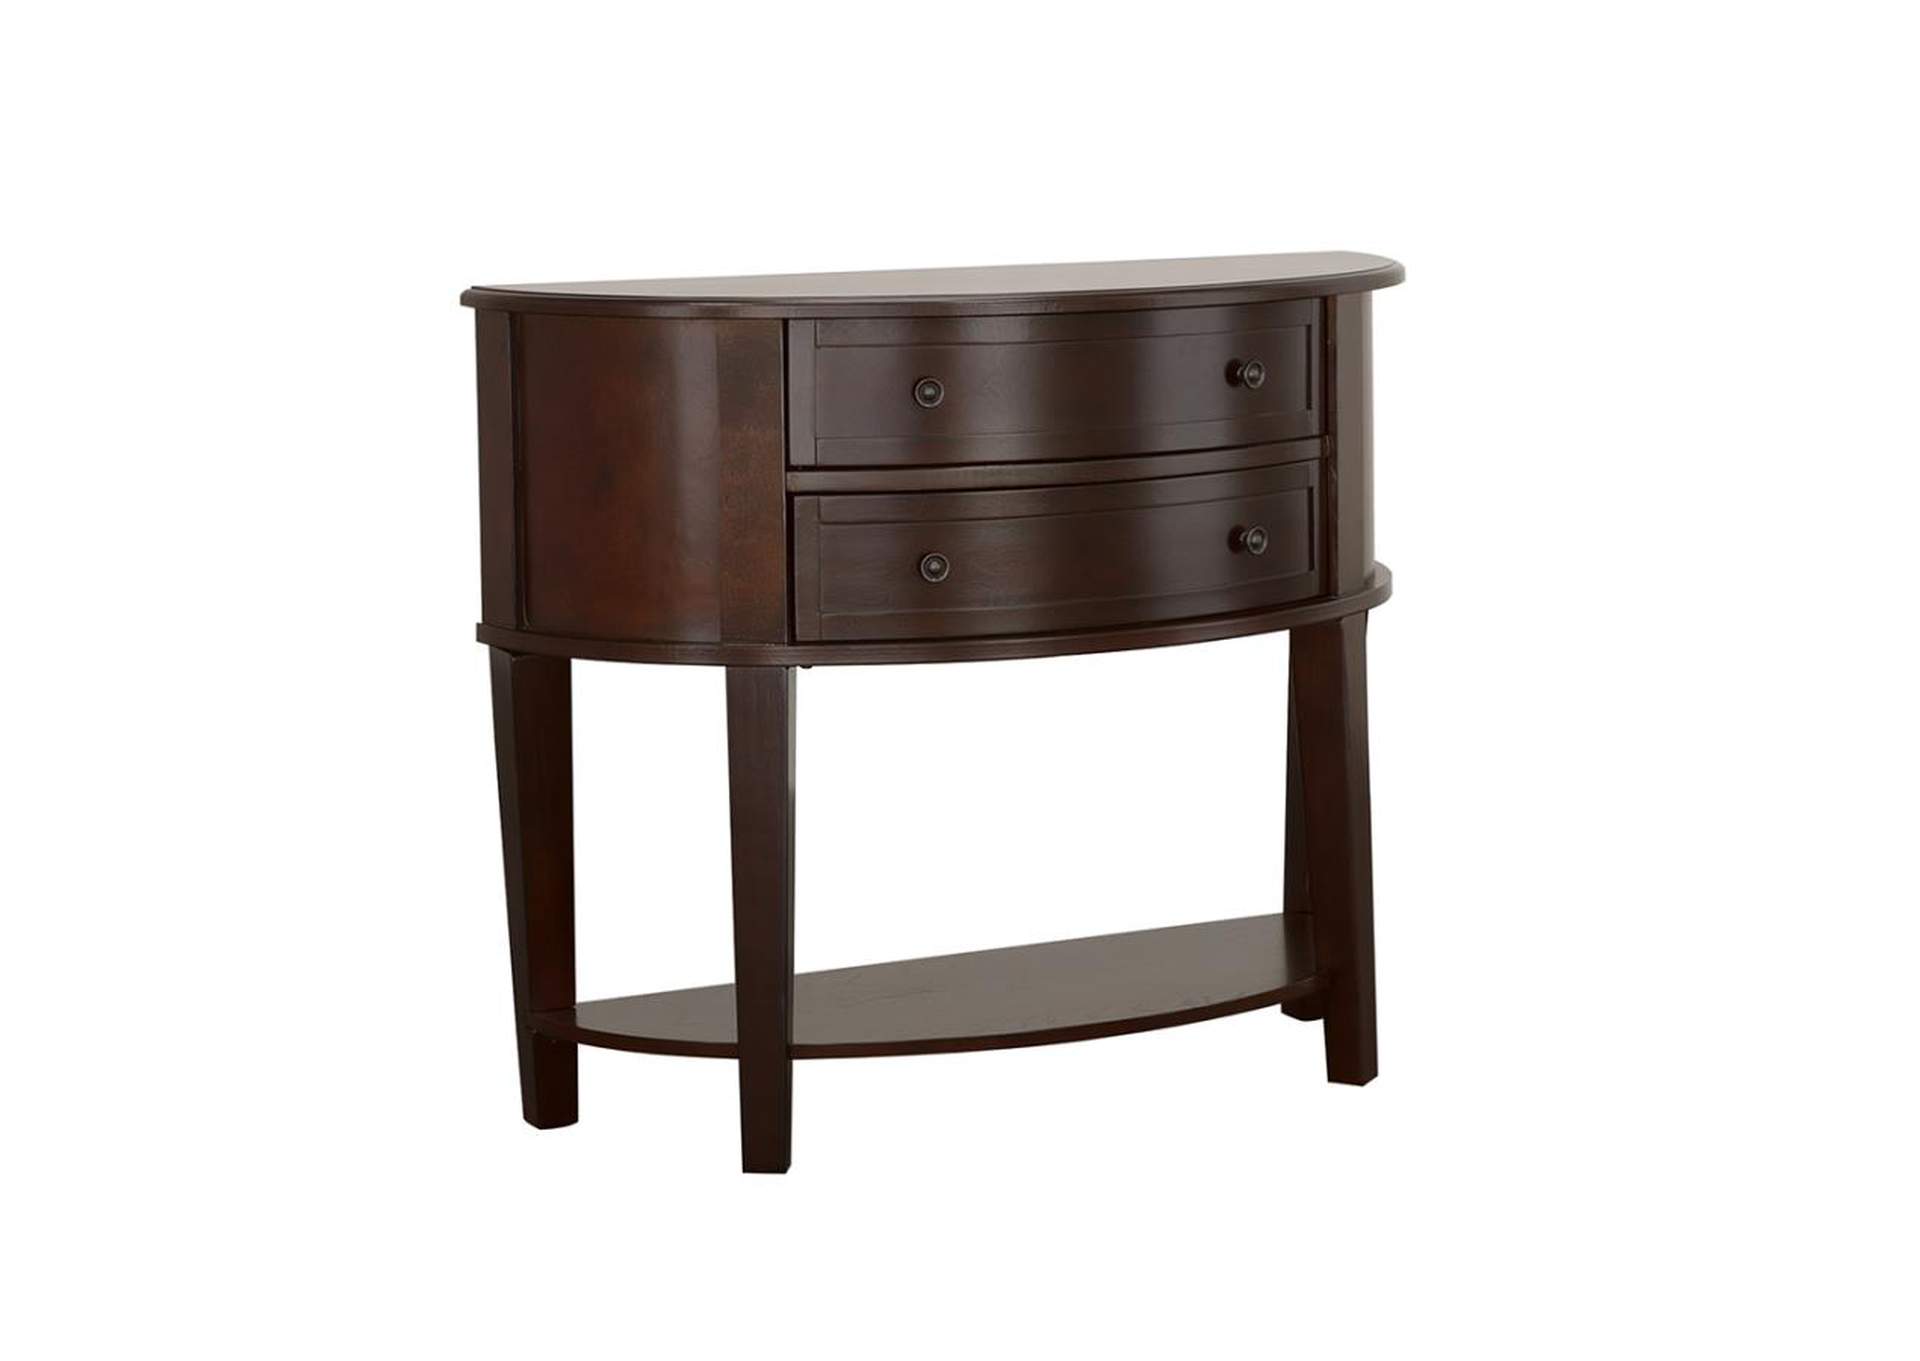 2-drawer Demilune Shape Console Table Cappuccino,Coaster Furniture